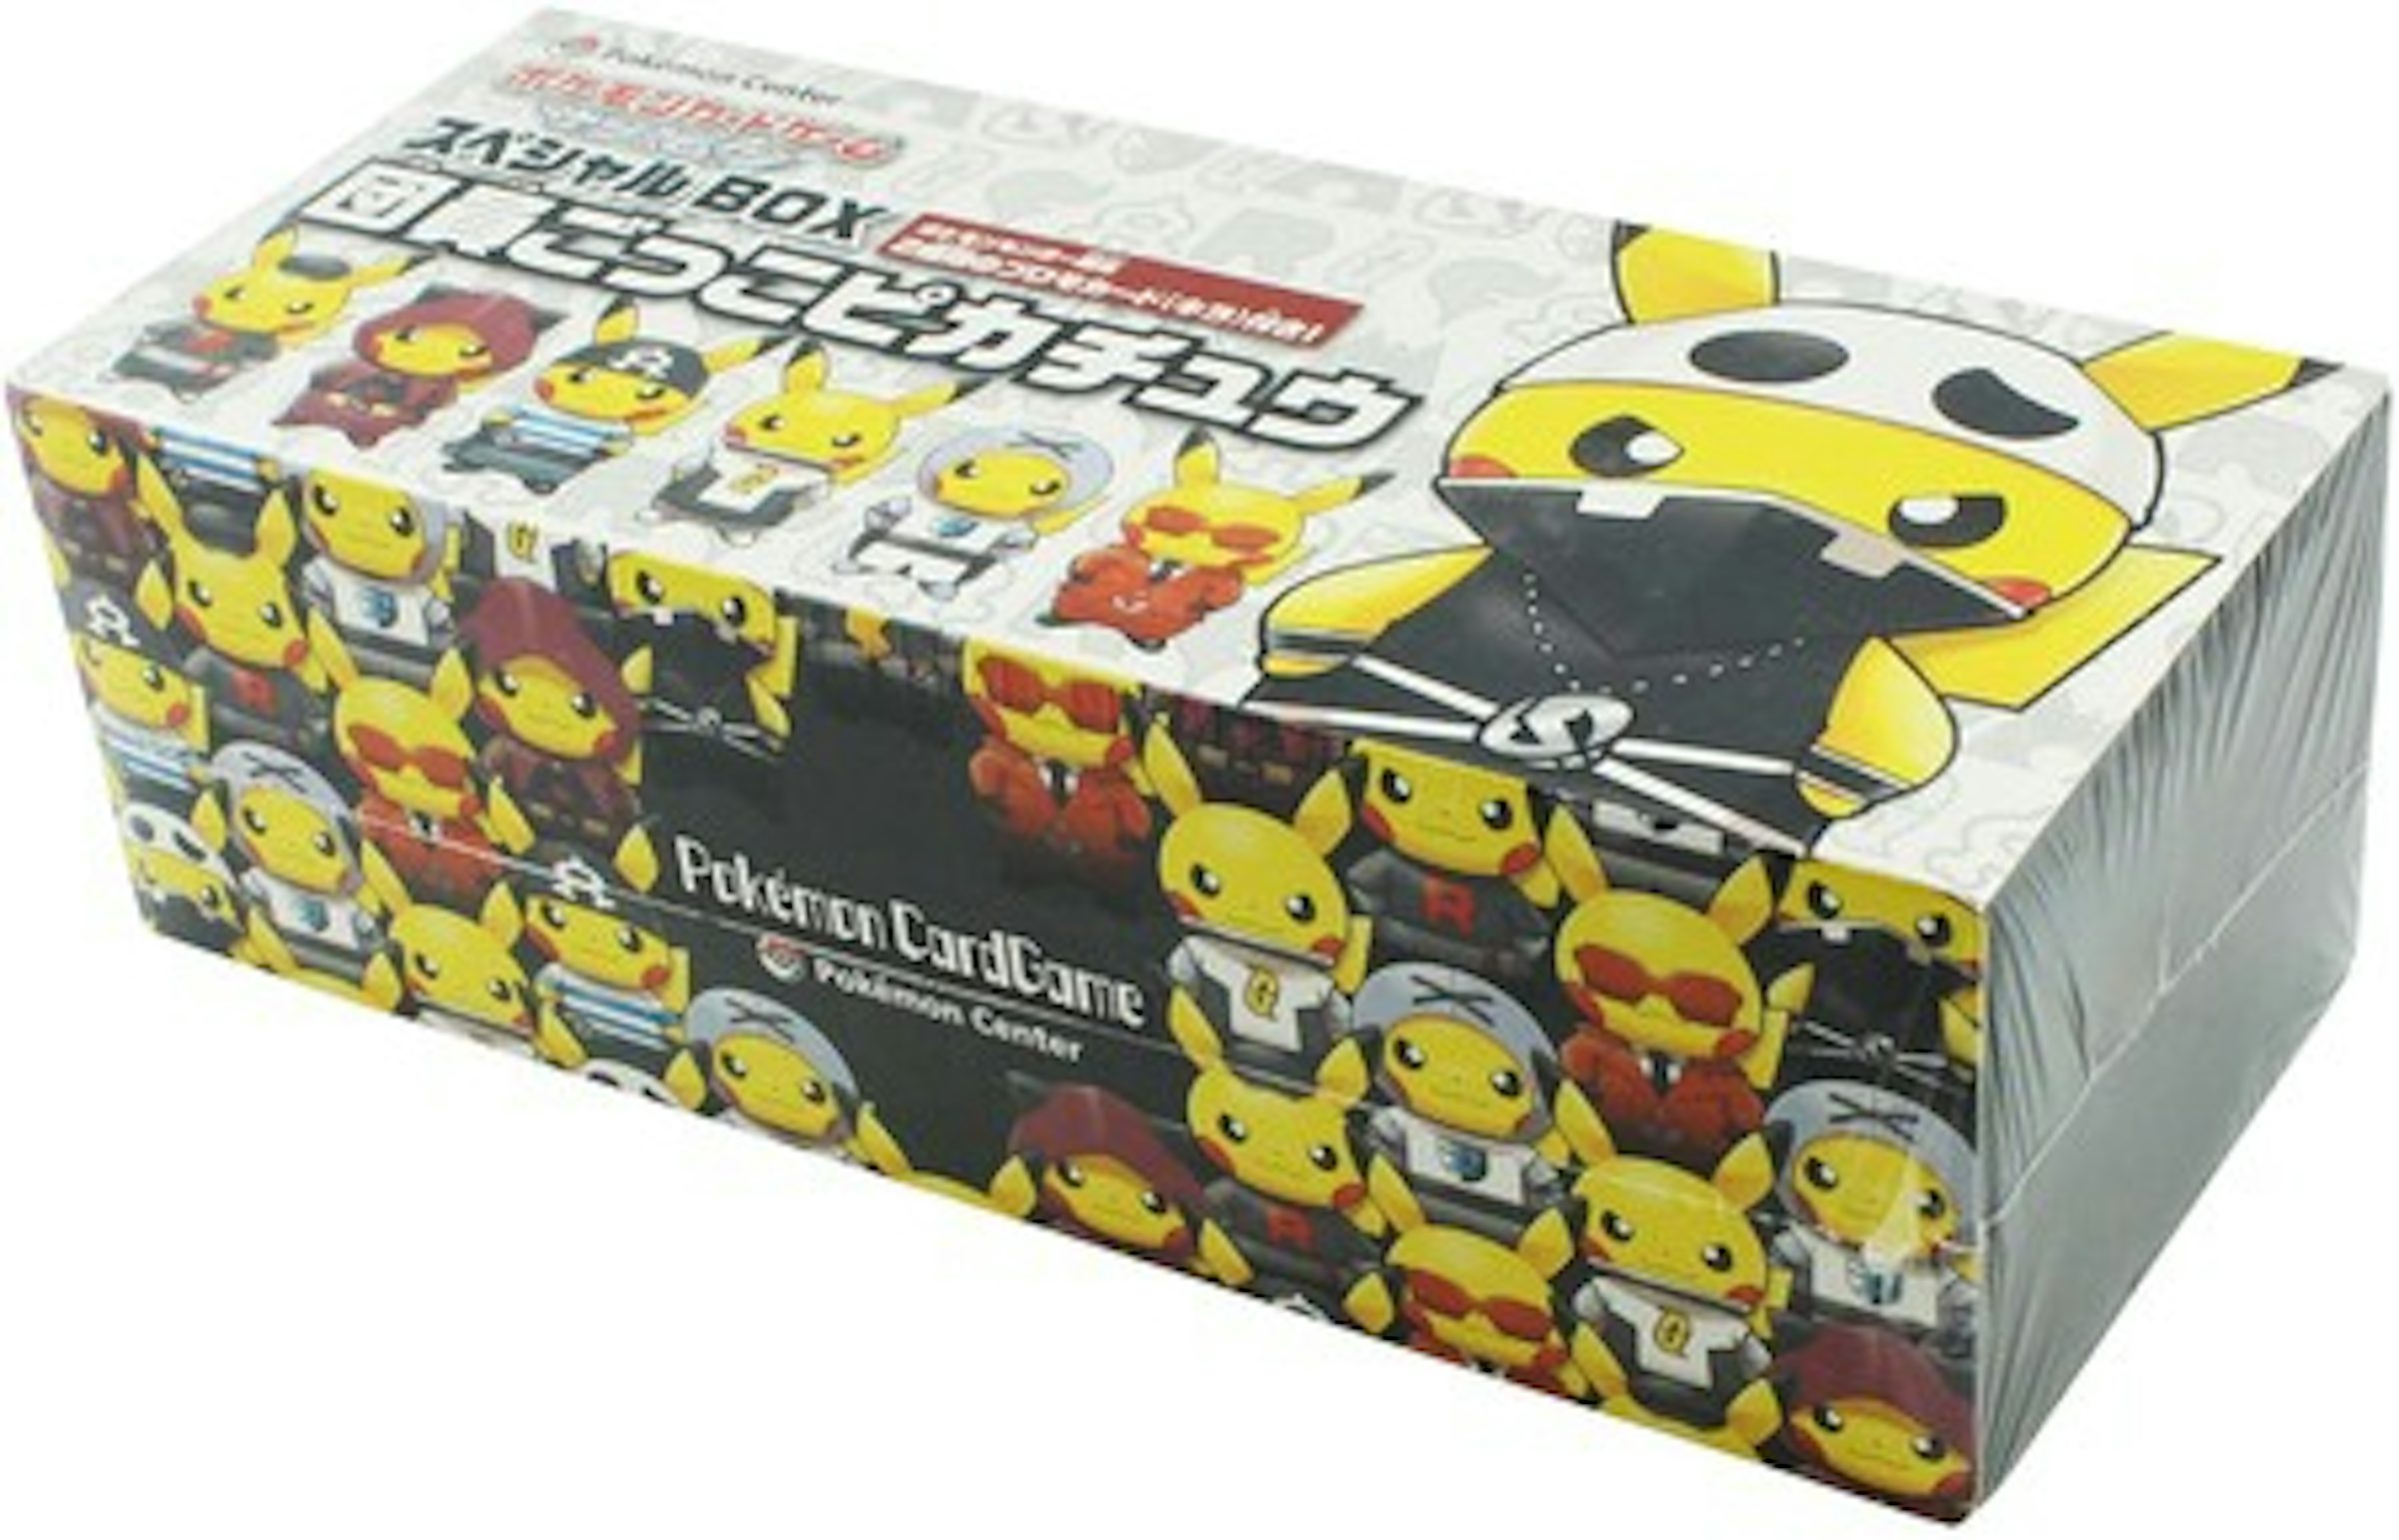 Pokemon Center Card Game Tokyo DX Special BOX Sun & moon Pikachu Promo Rare  F/S